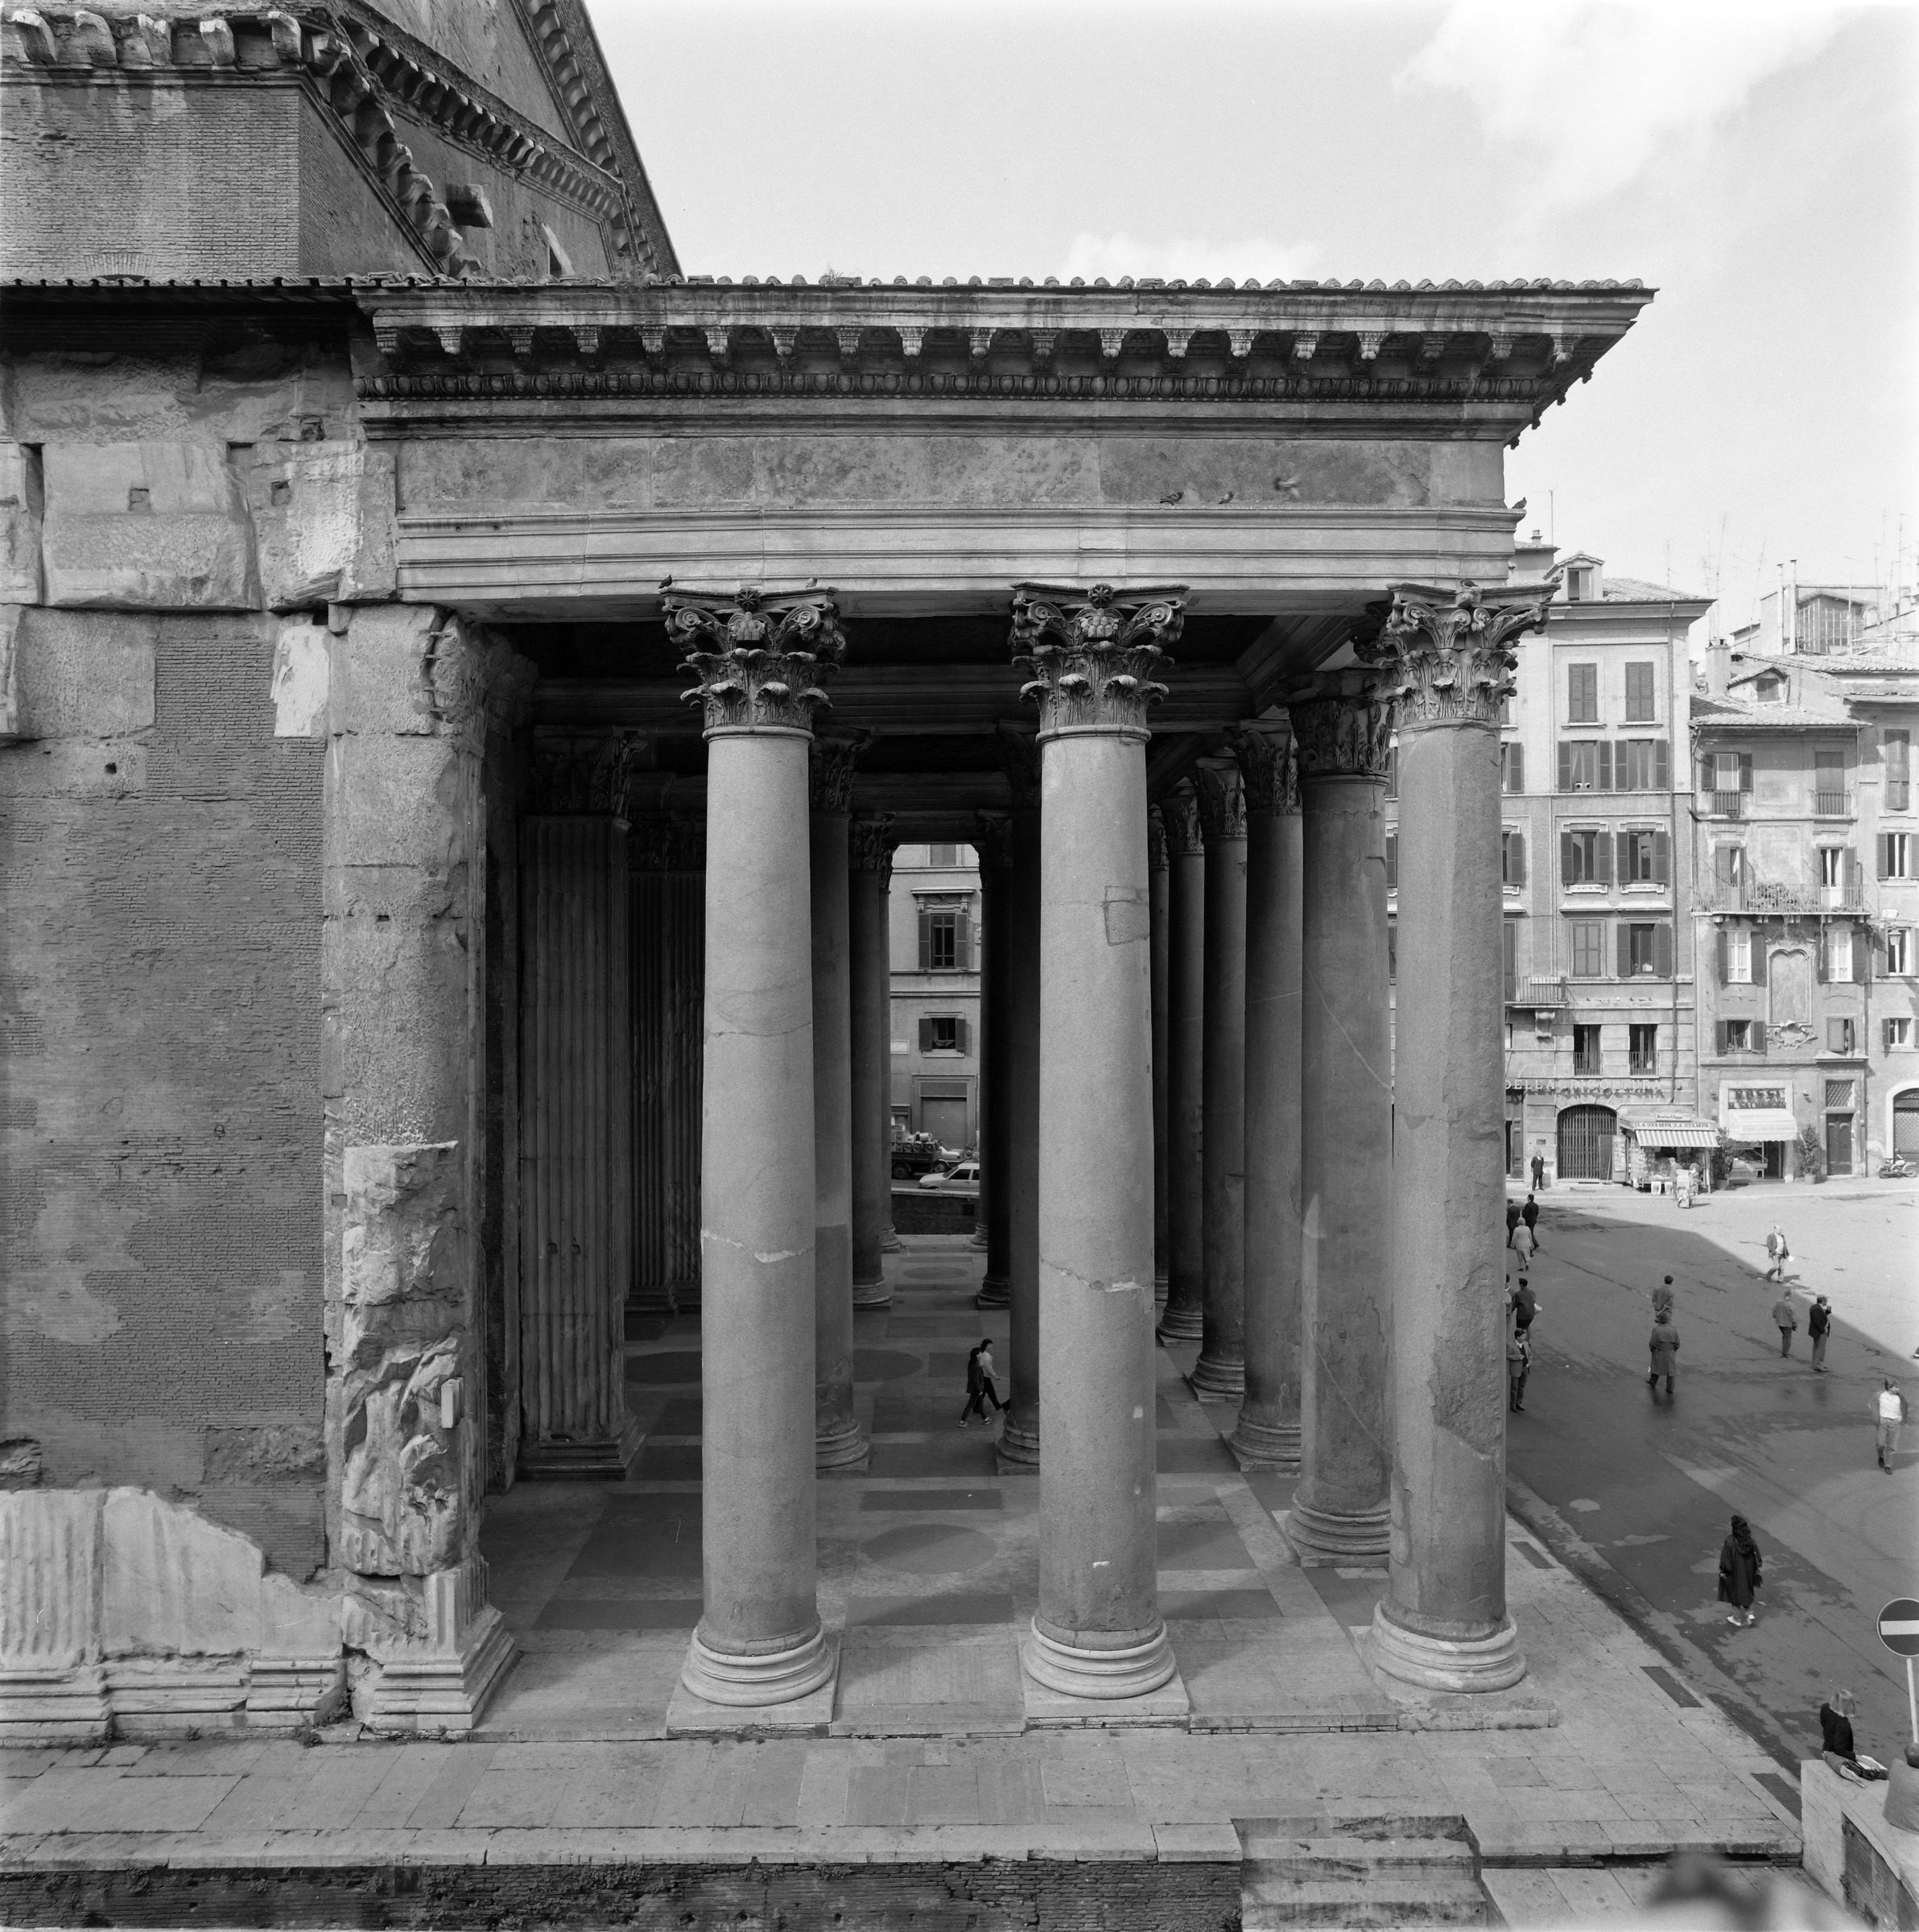 Fotografo non identificato, Pantheon,1951-2000, gelatina ai sali d'argento, 6x6 cm, N078022